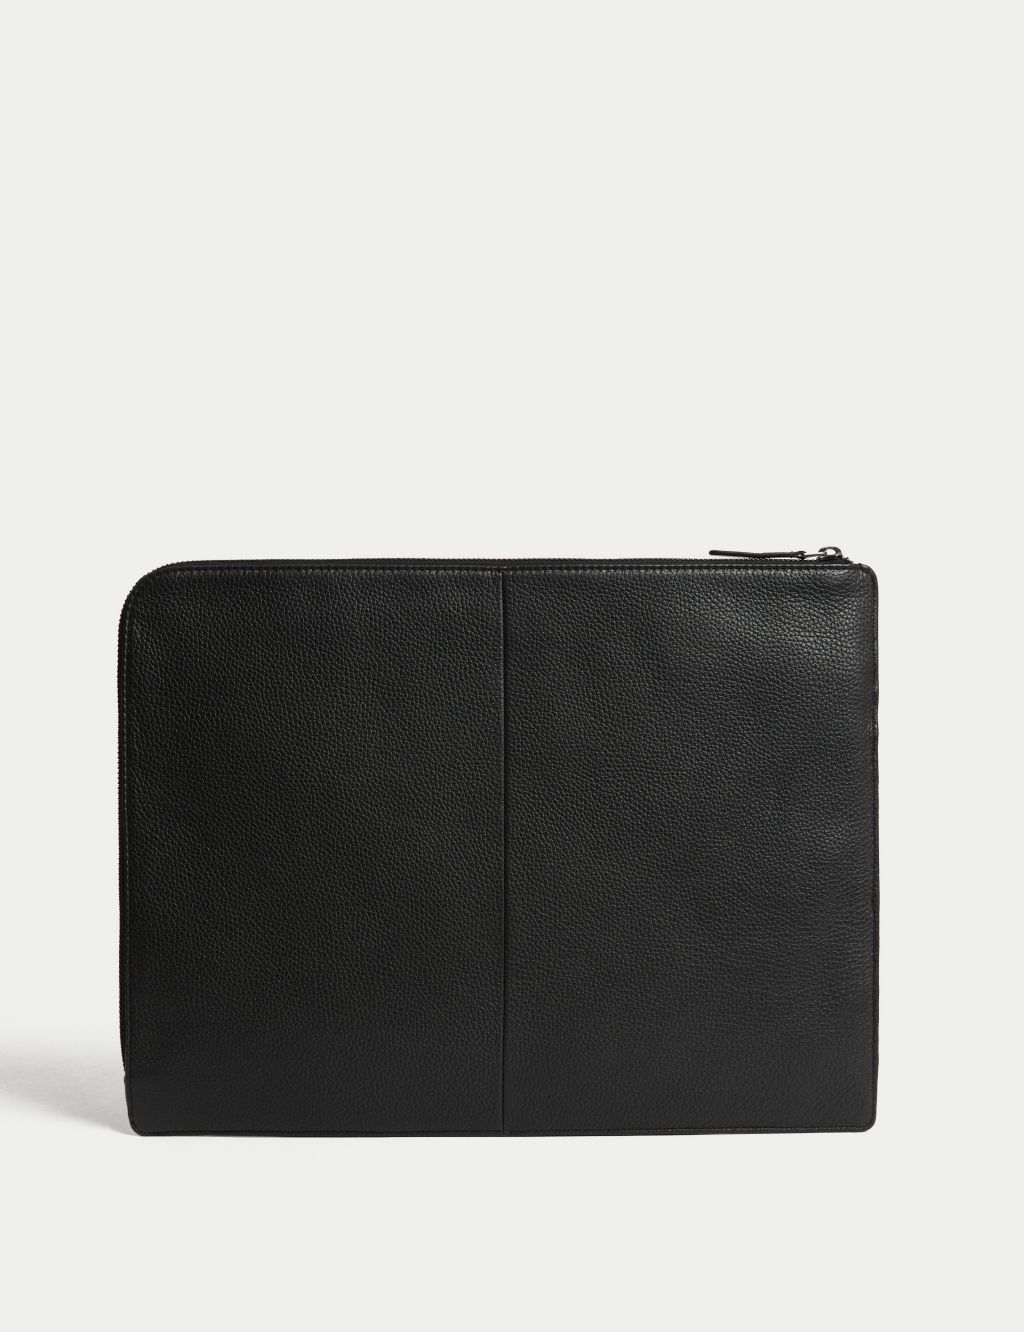 Leather Laptop Bag image 3